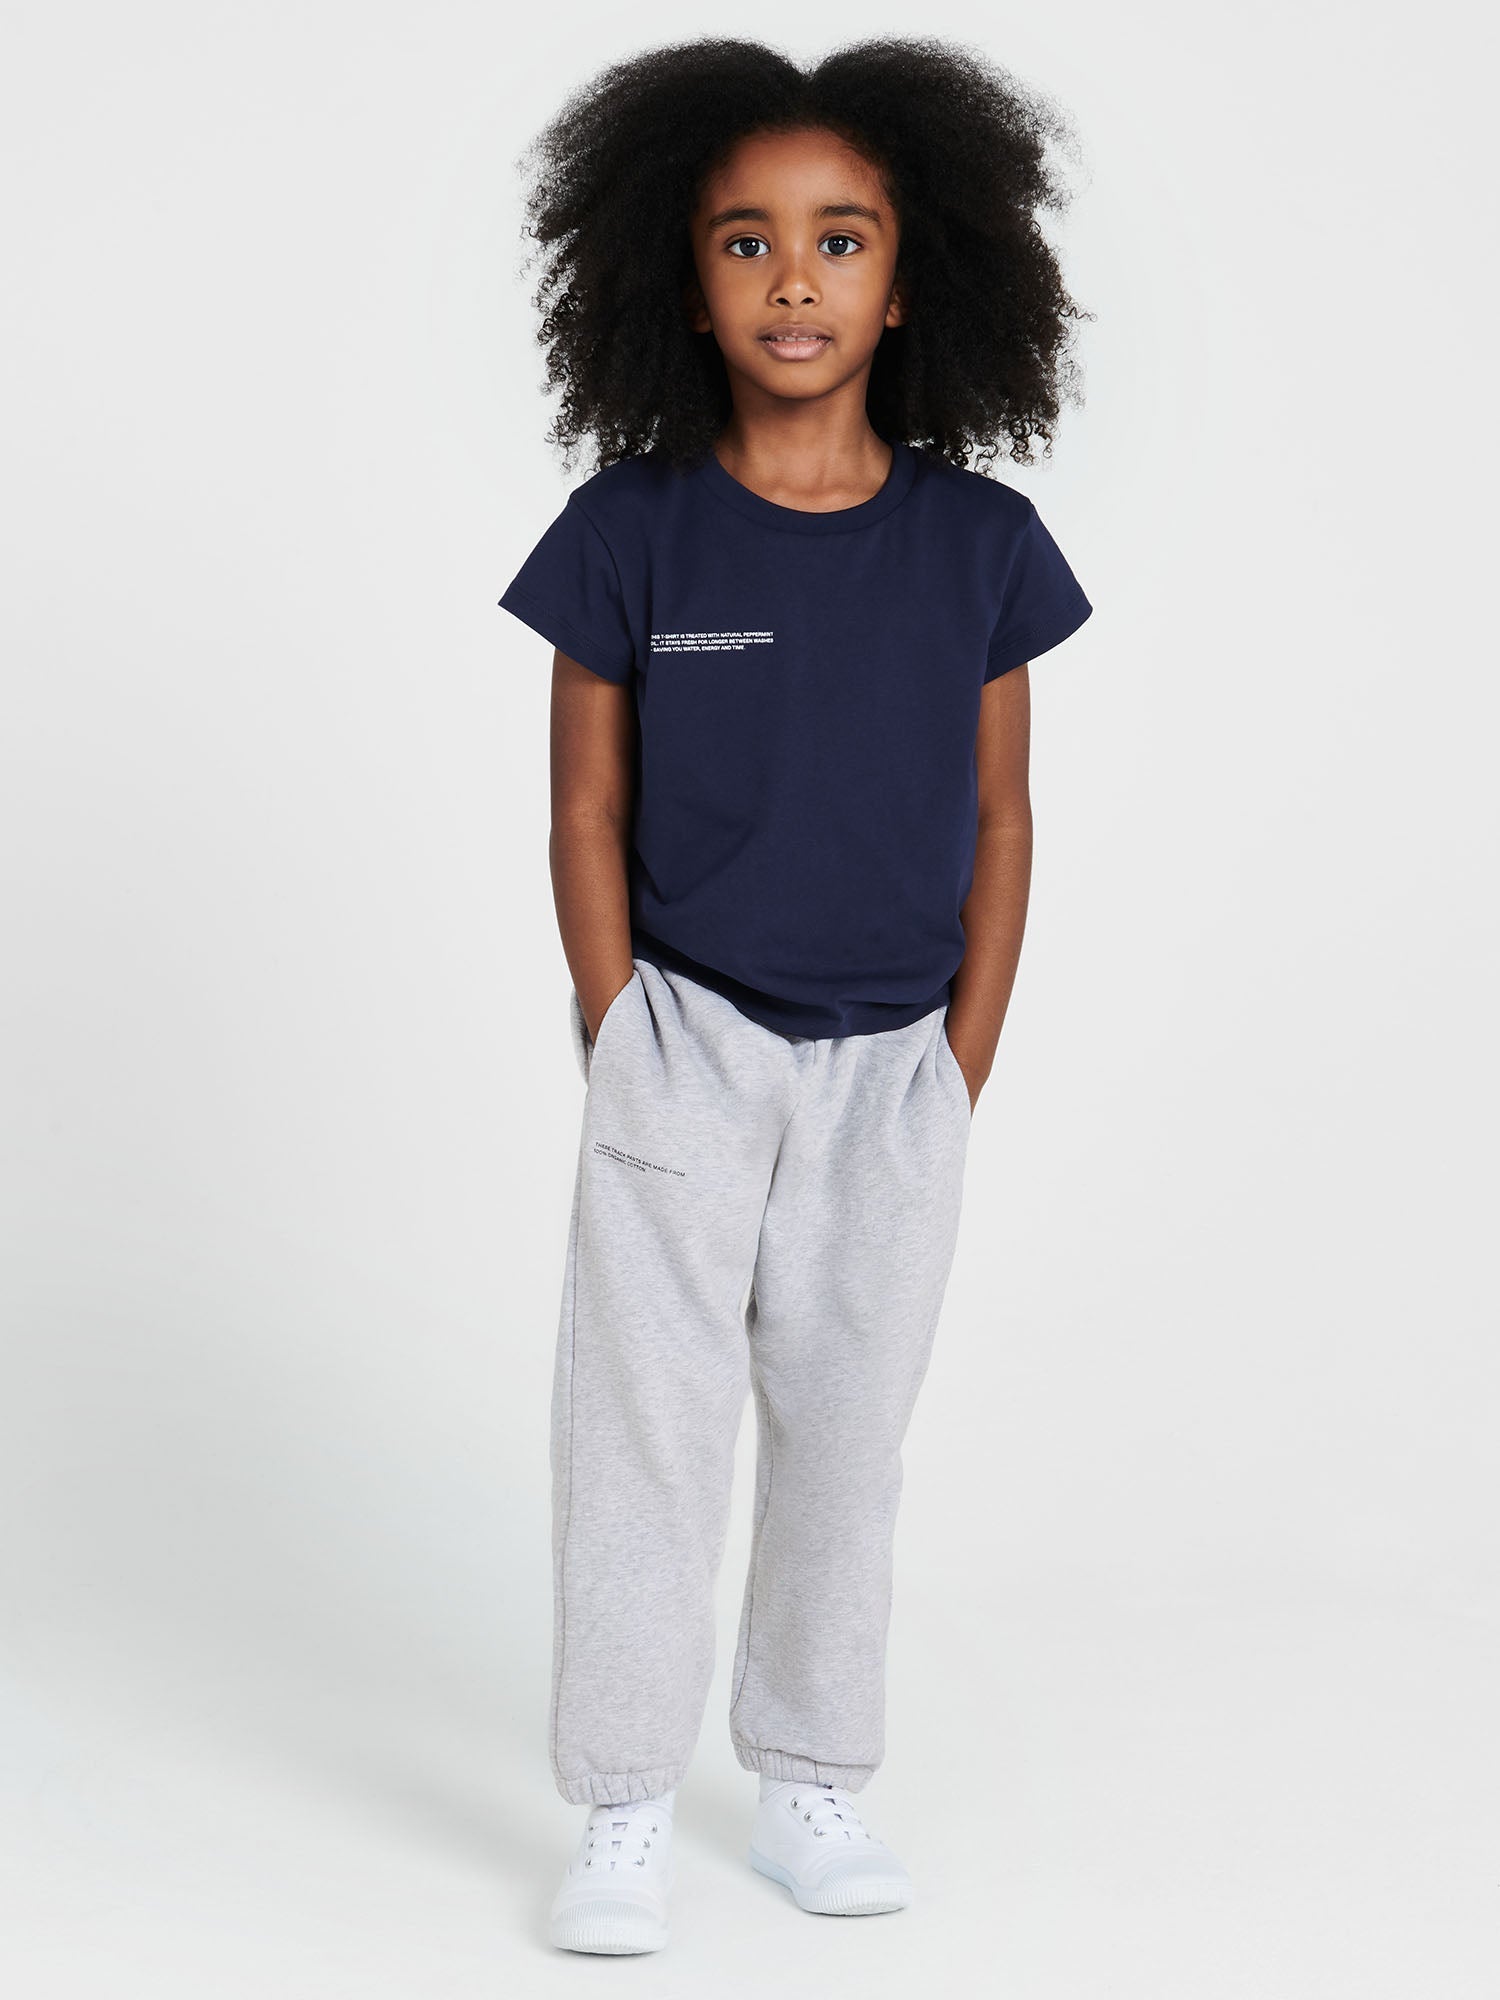 Kids Organic Cotton T Shirt Navy Model